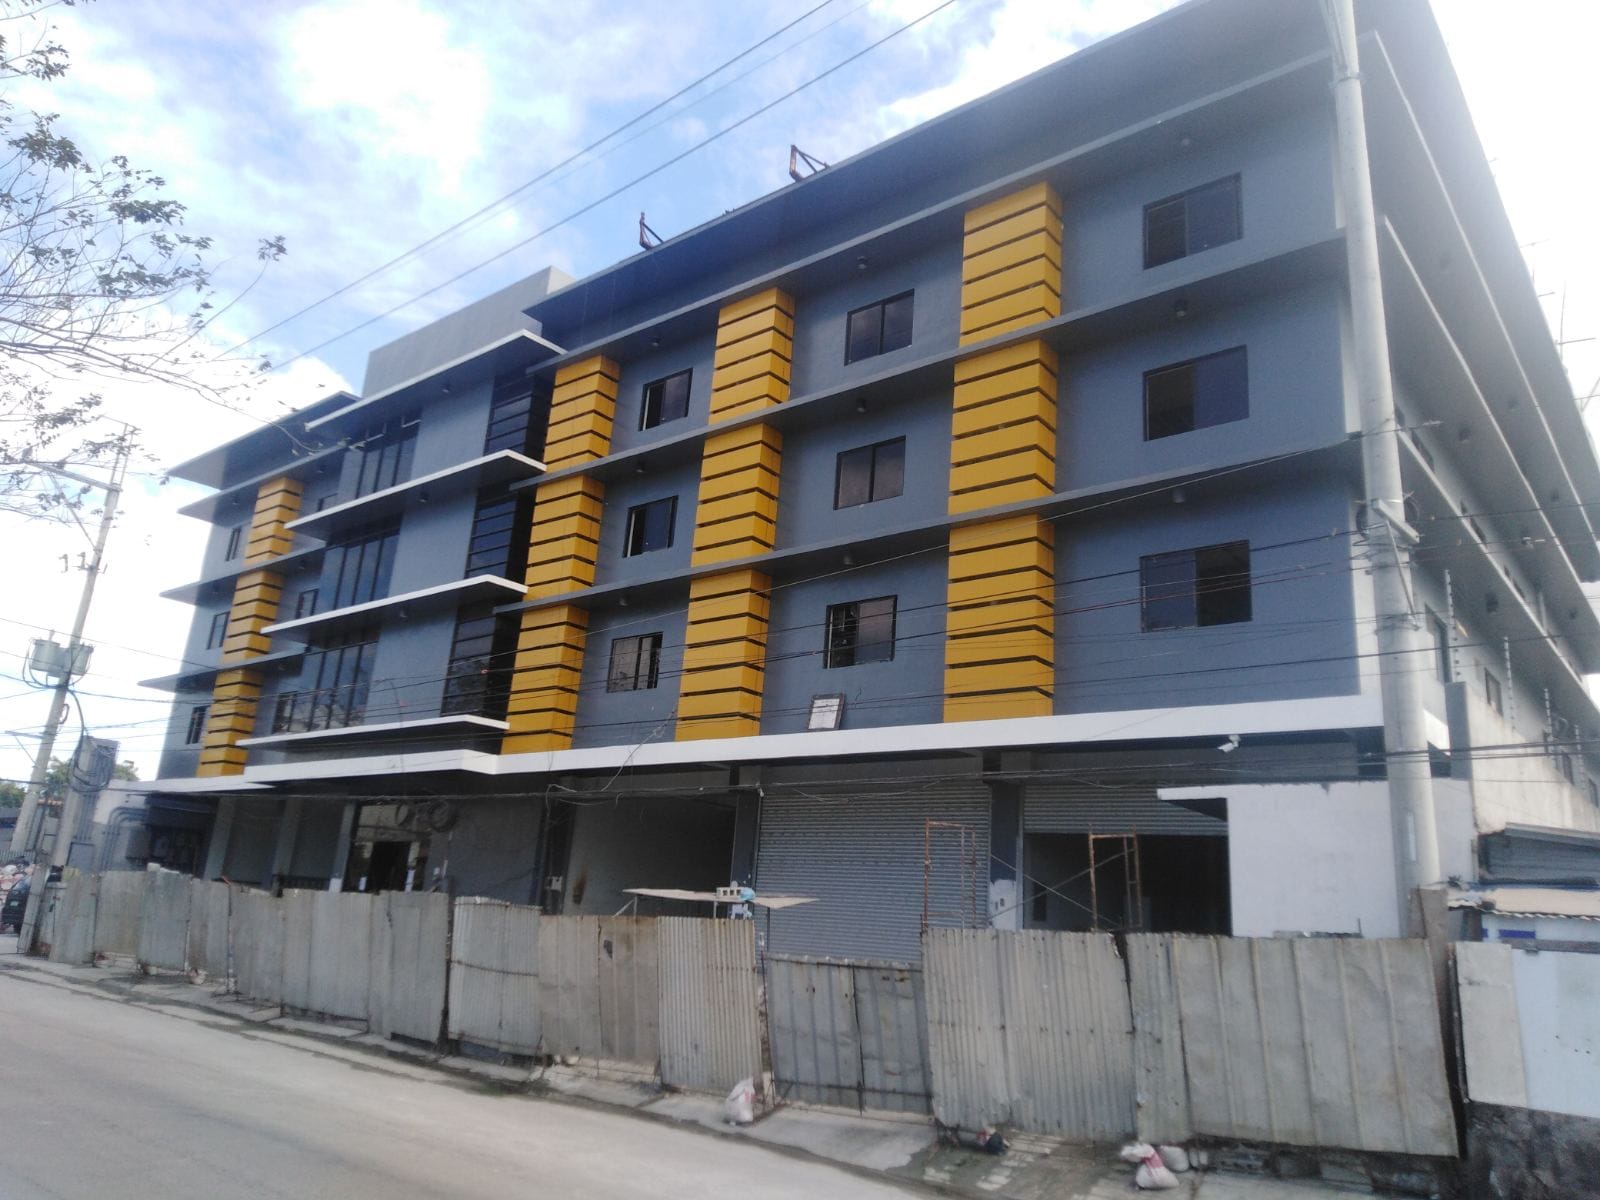 2,200sqm 4 storey building for lease at Sta. Monica, Quezon City